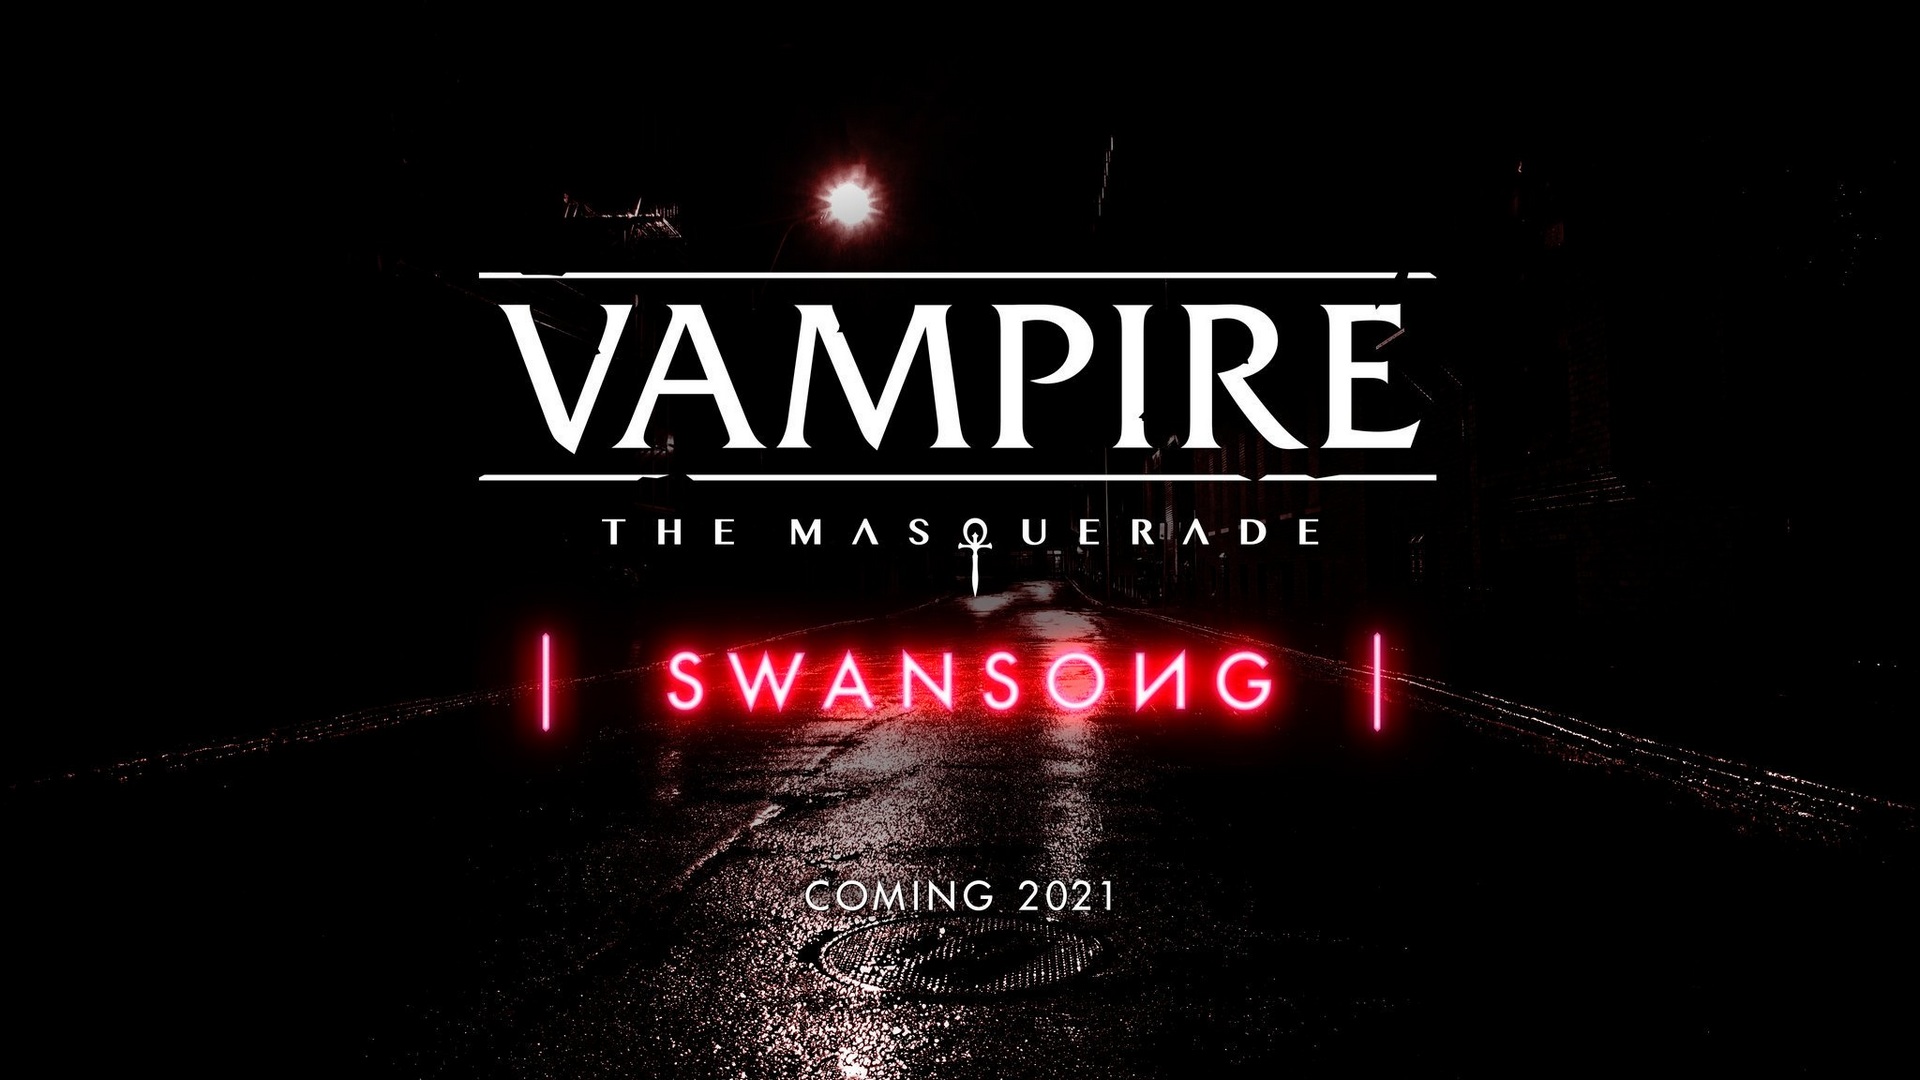 Vampire: the masquerade - swansong illustration